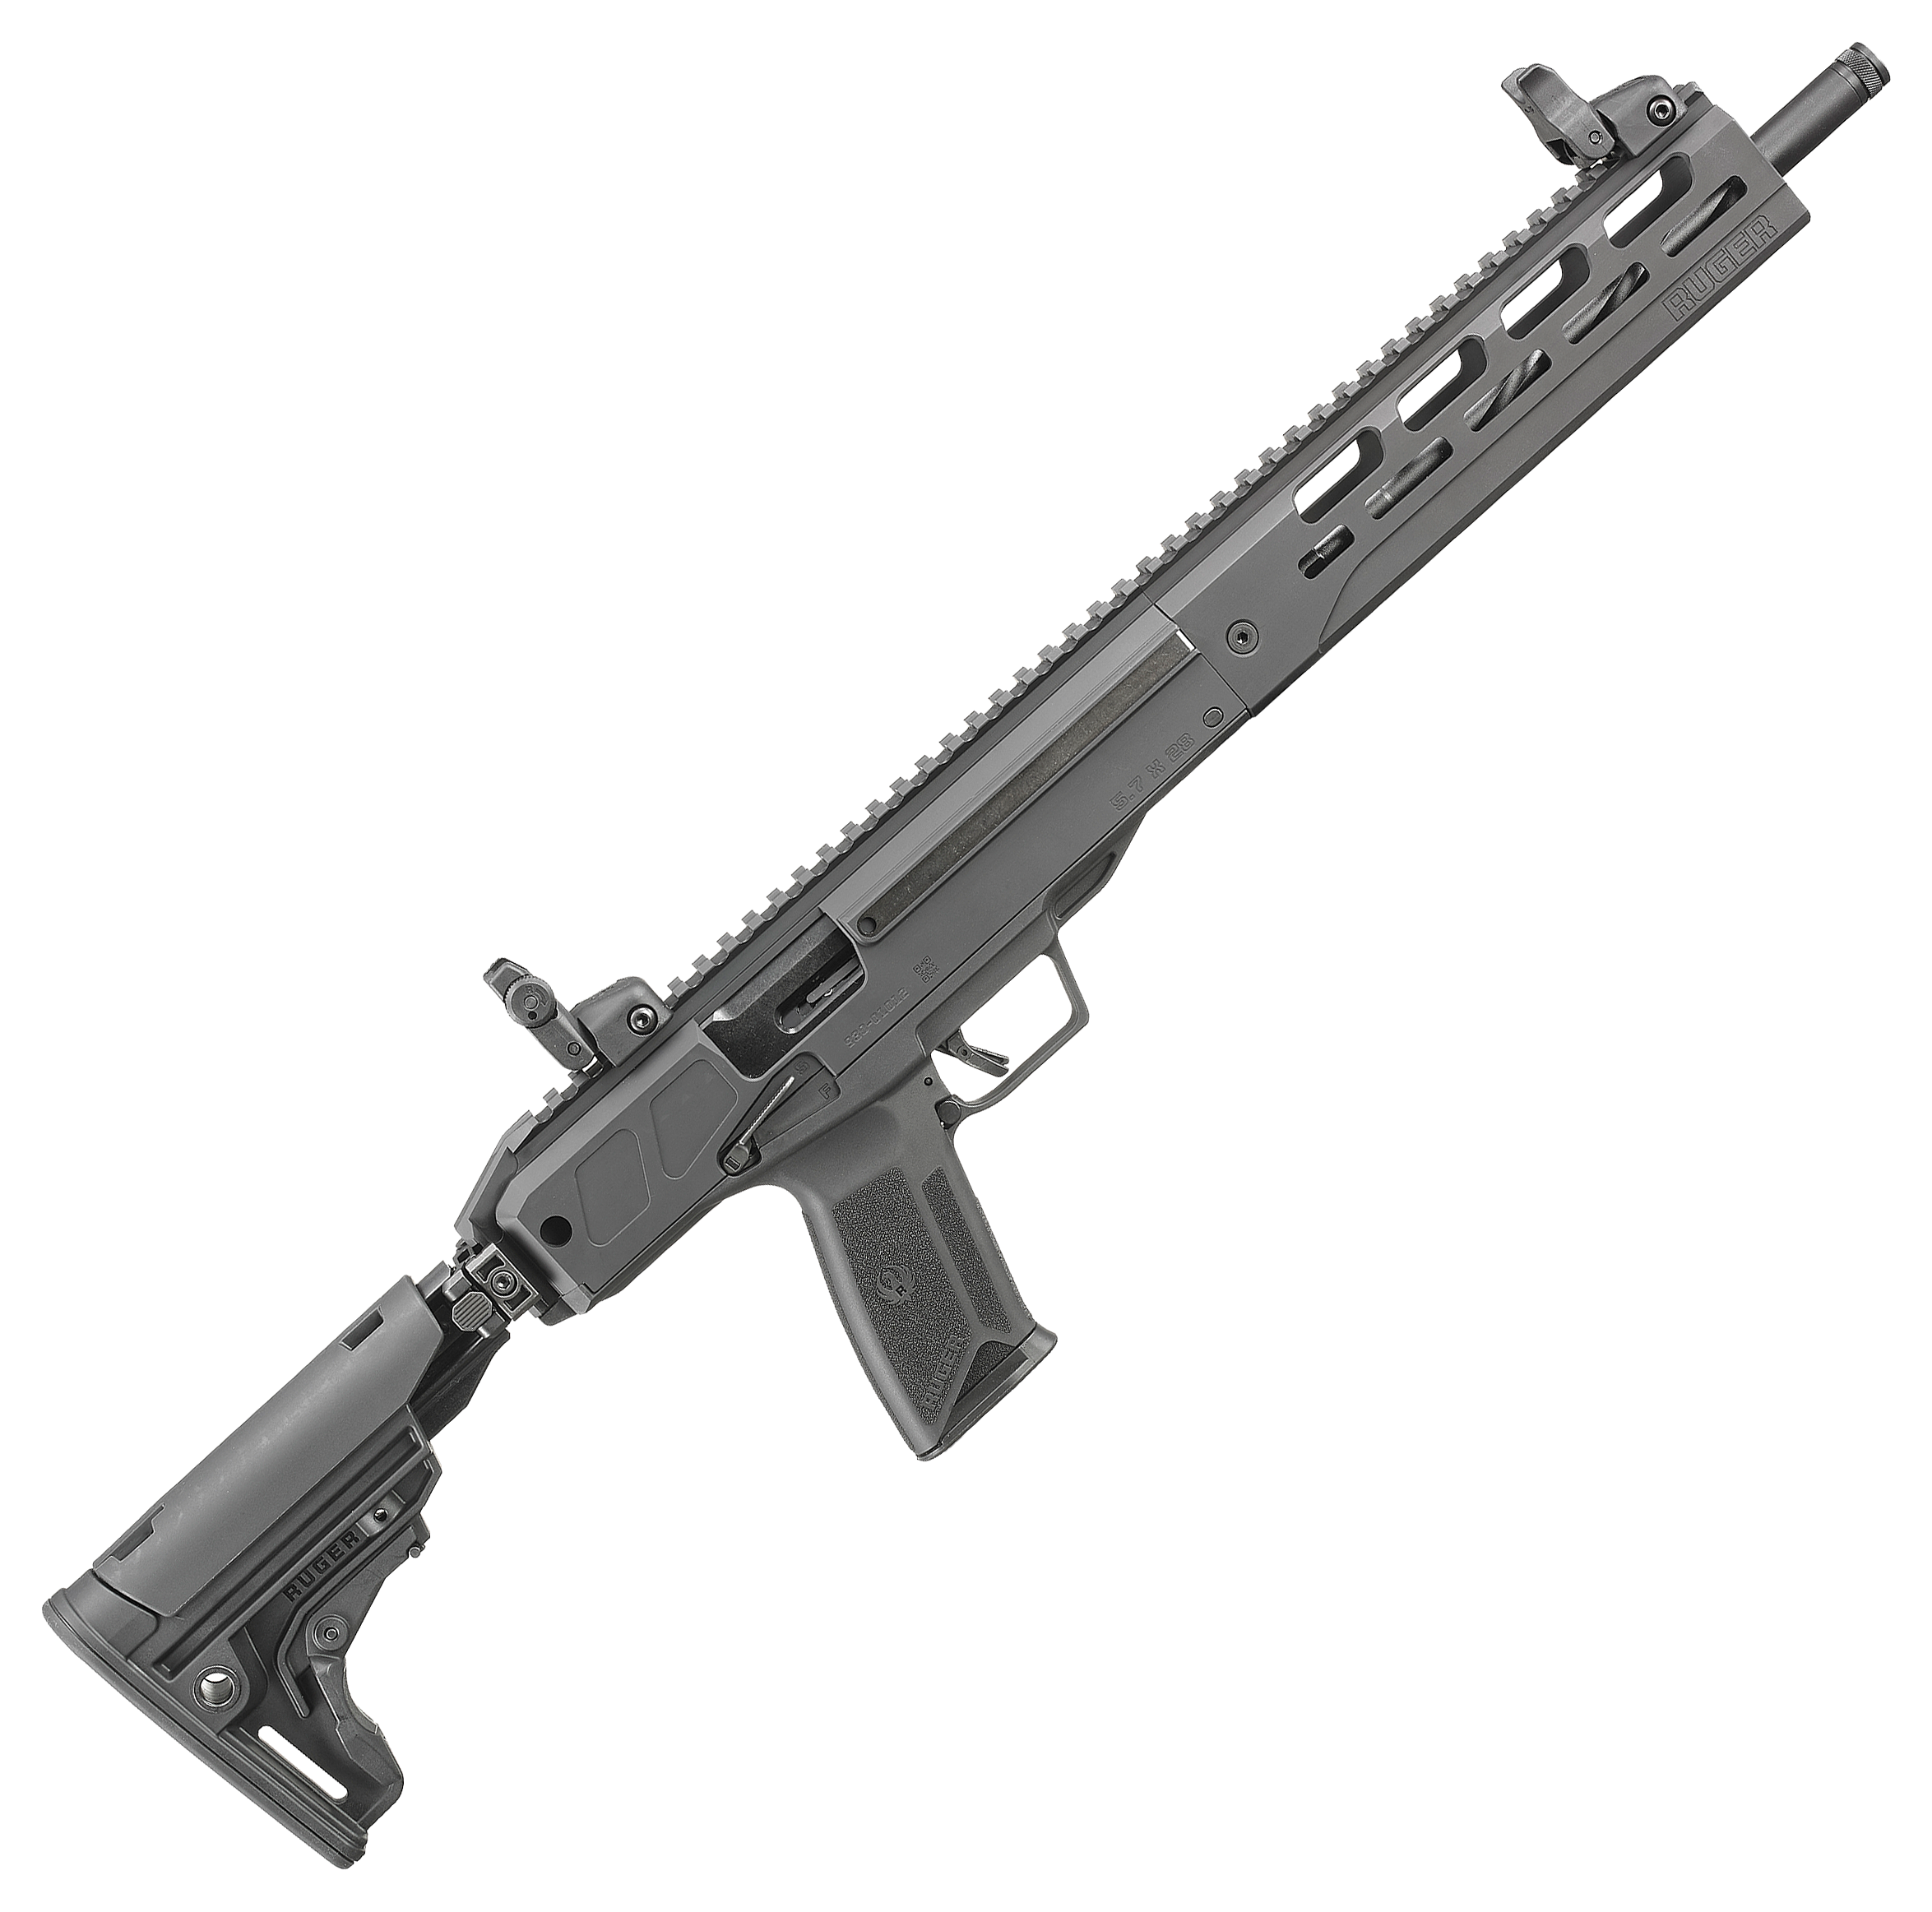 Ruger LC Carbine Semi-Auto Rifle with Threaded Barrel | BoondockGear.com